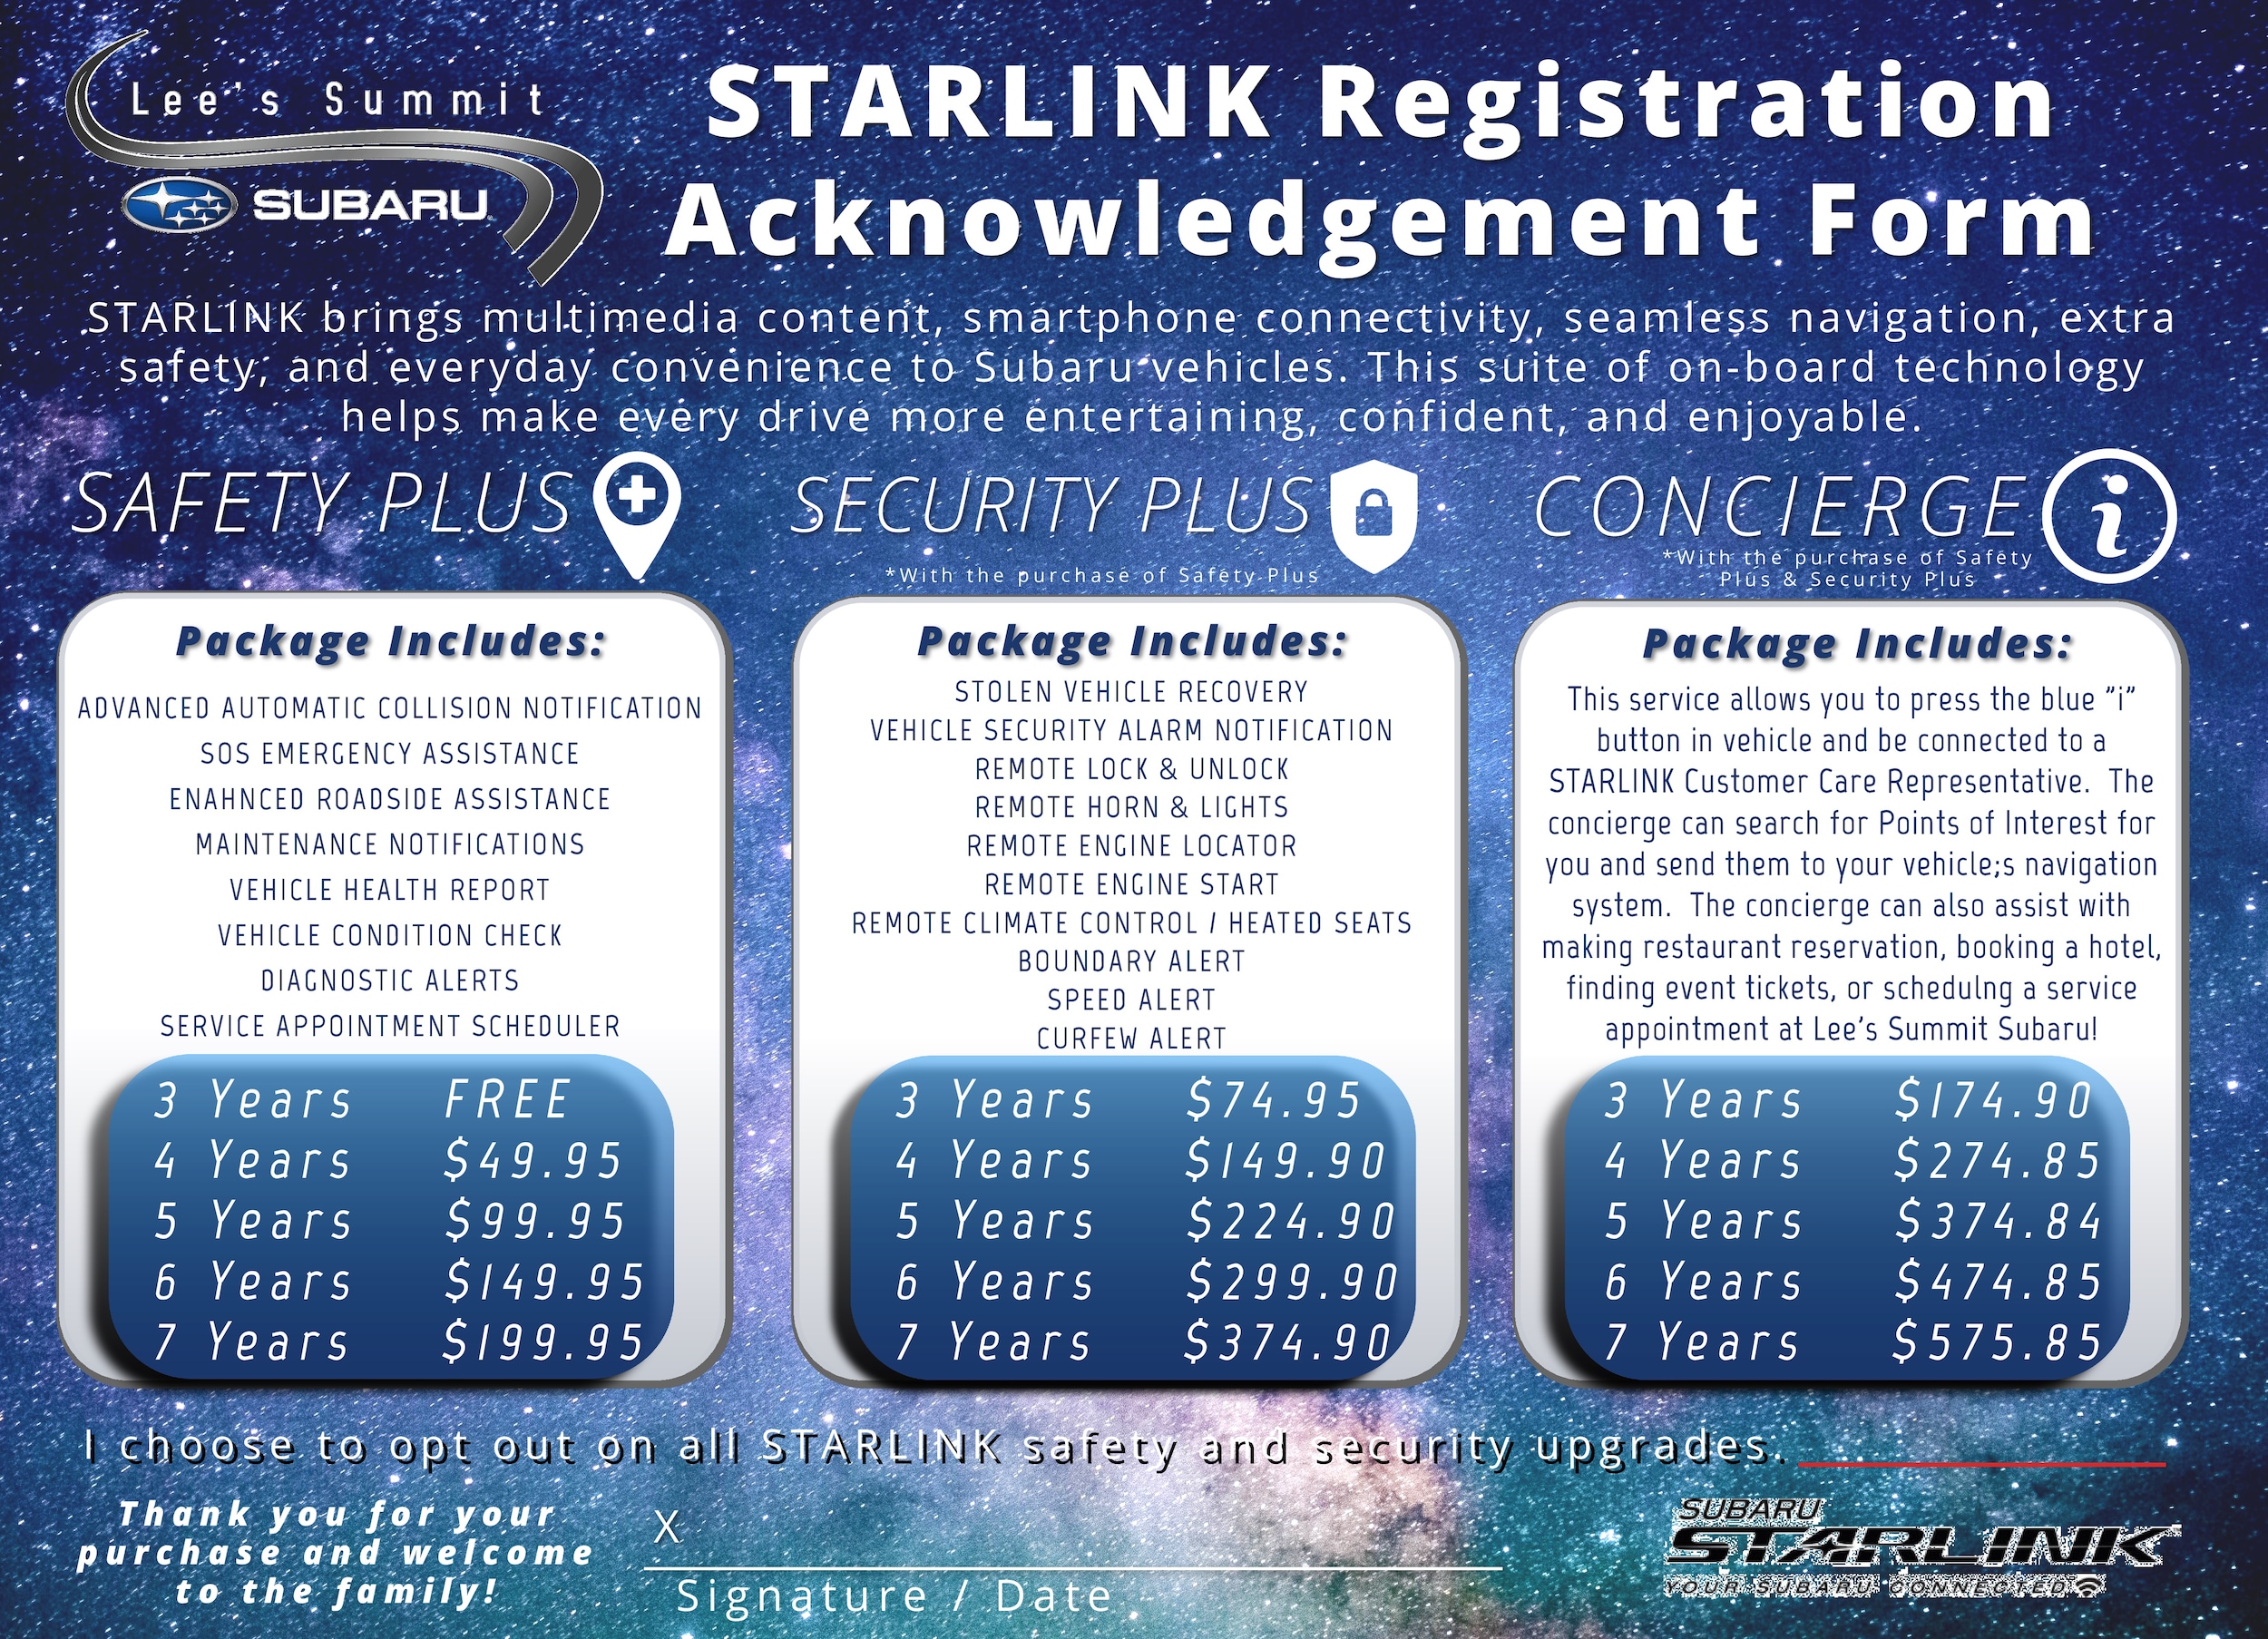 Top 5 Reasons to Upgrade Your Subaru With STARLINK Lee's Summit Subaru